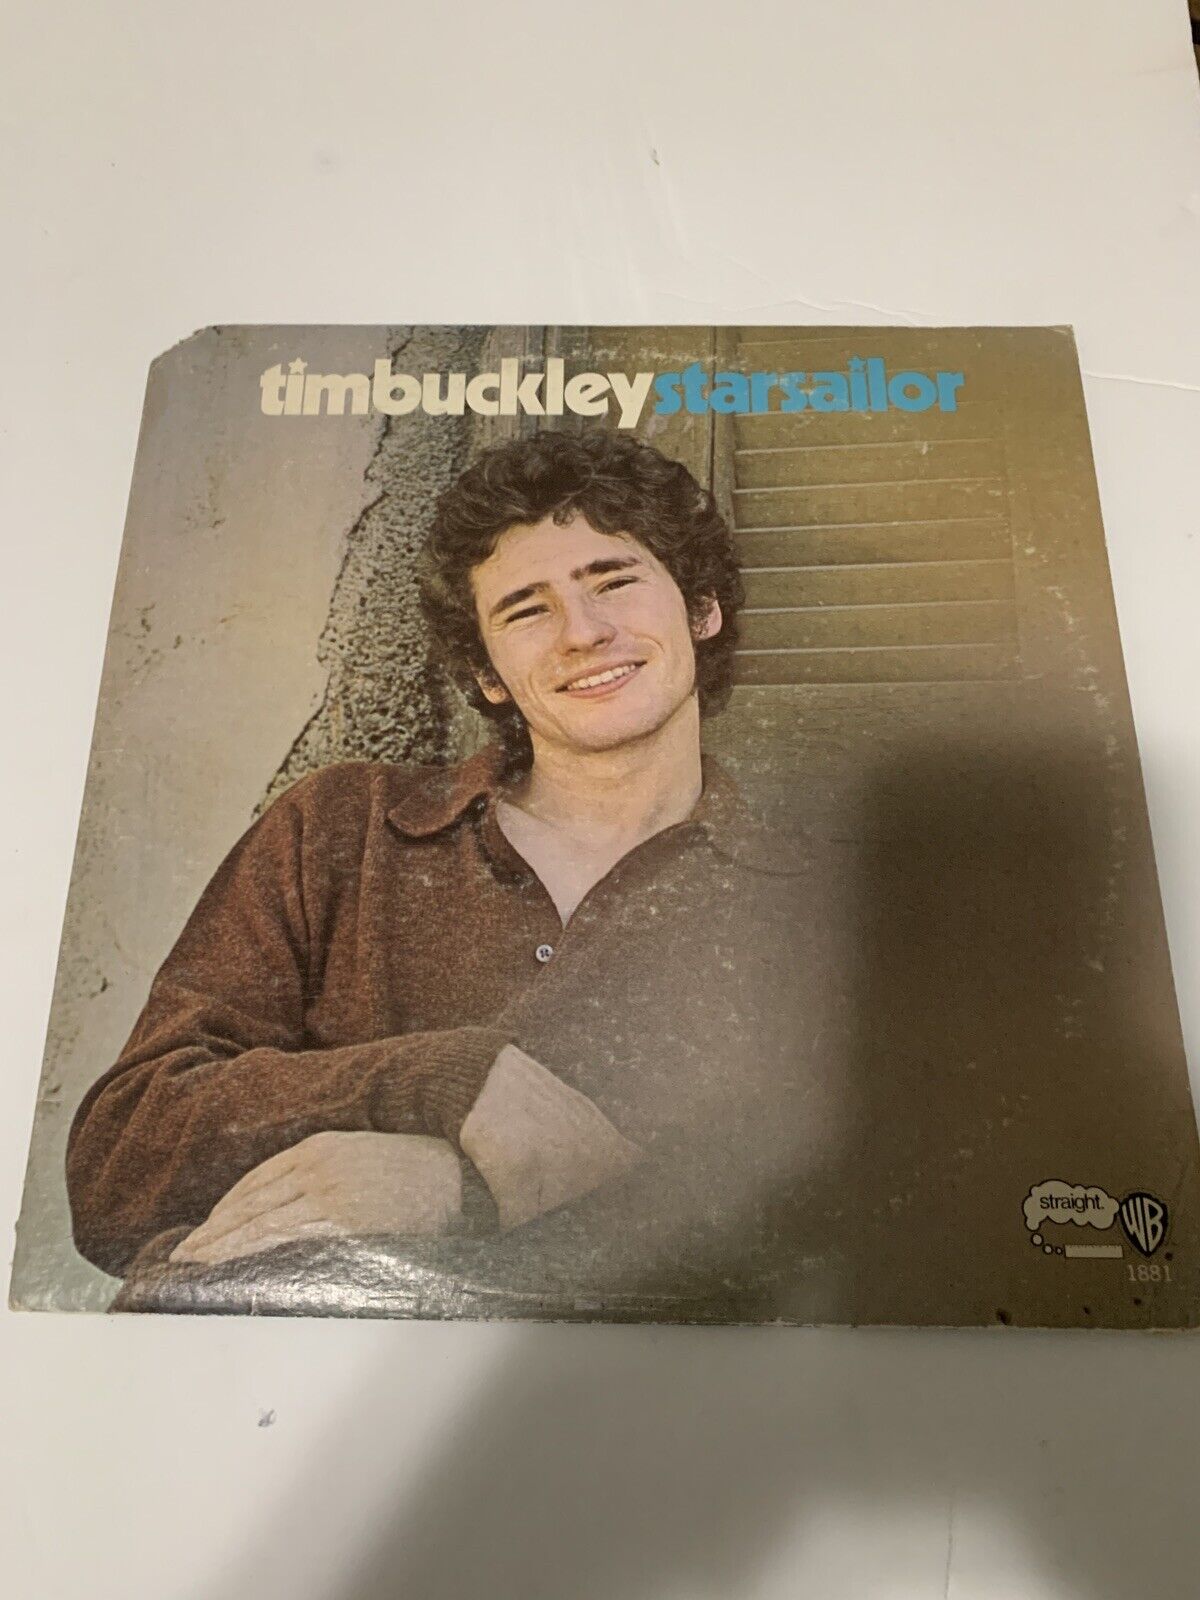 TIM BUCKLEY: Starsailor Vinyl LP (WS 1881) RARE 1970 Psychedelic/Folk Rock